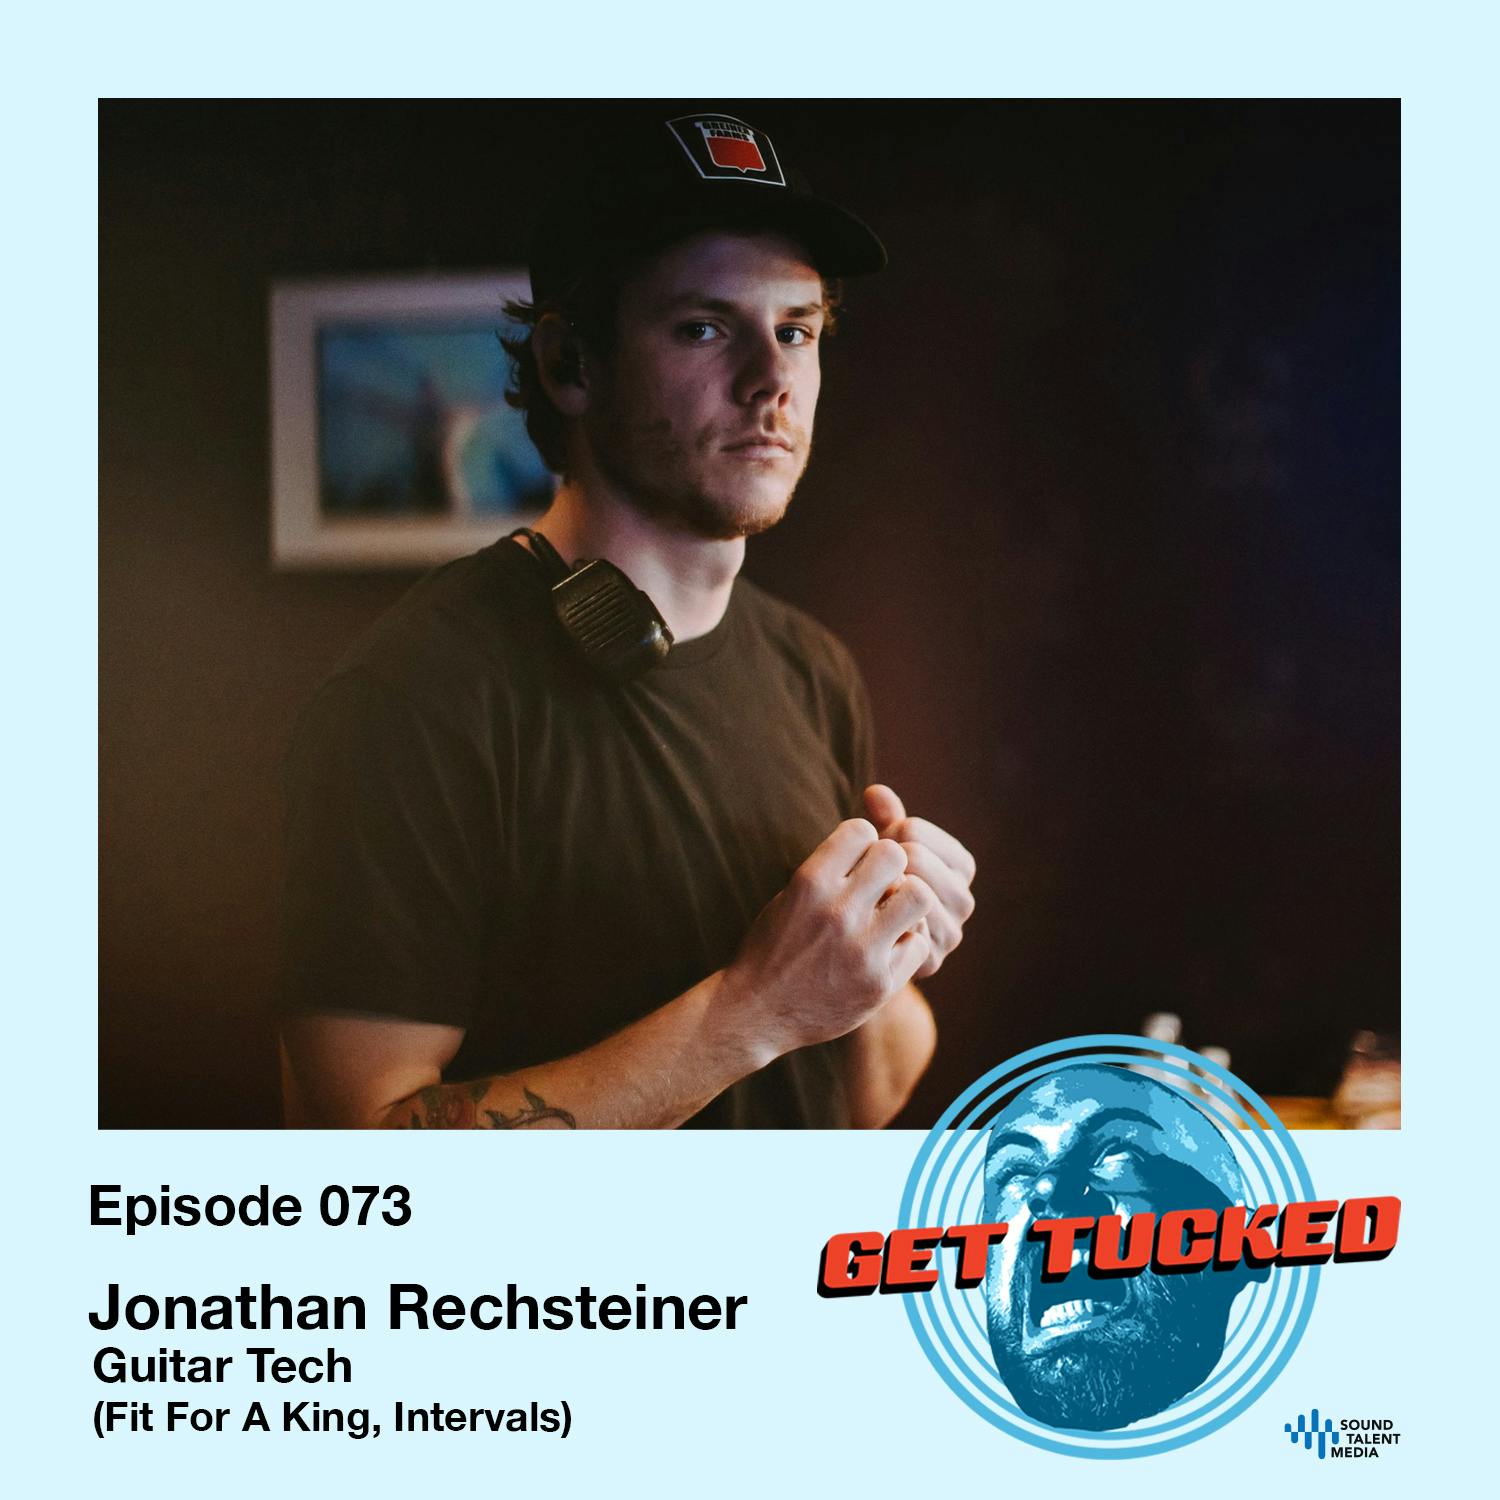 Ep. 73 feat. Jonathan Rechsteiner - Guitar Tech of FFAK/INTERVALS, Guitarist of Our Vices